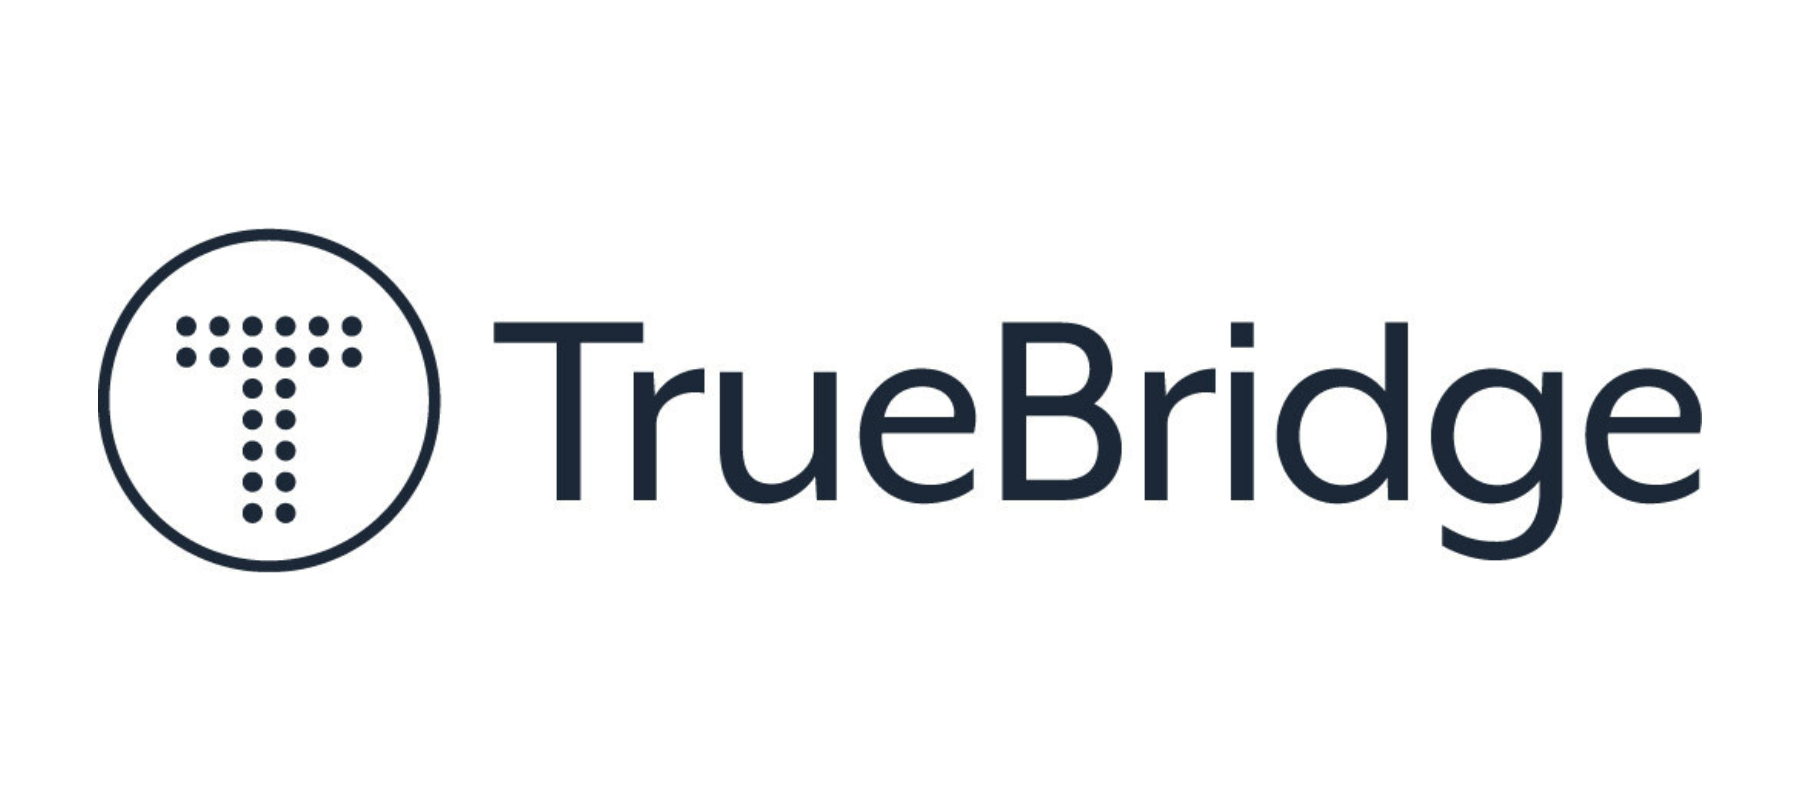 TrueBridge Capital Partners raises $1.6 billion across five venture capital investment vehicles